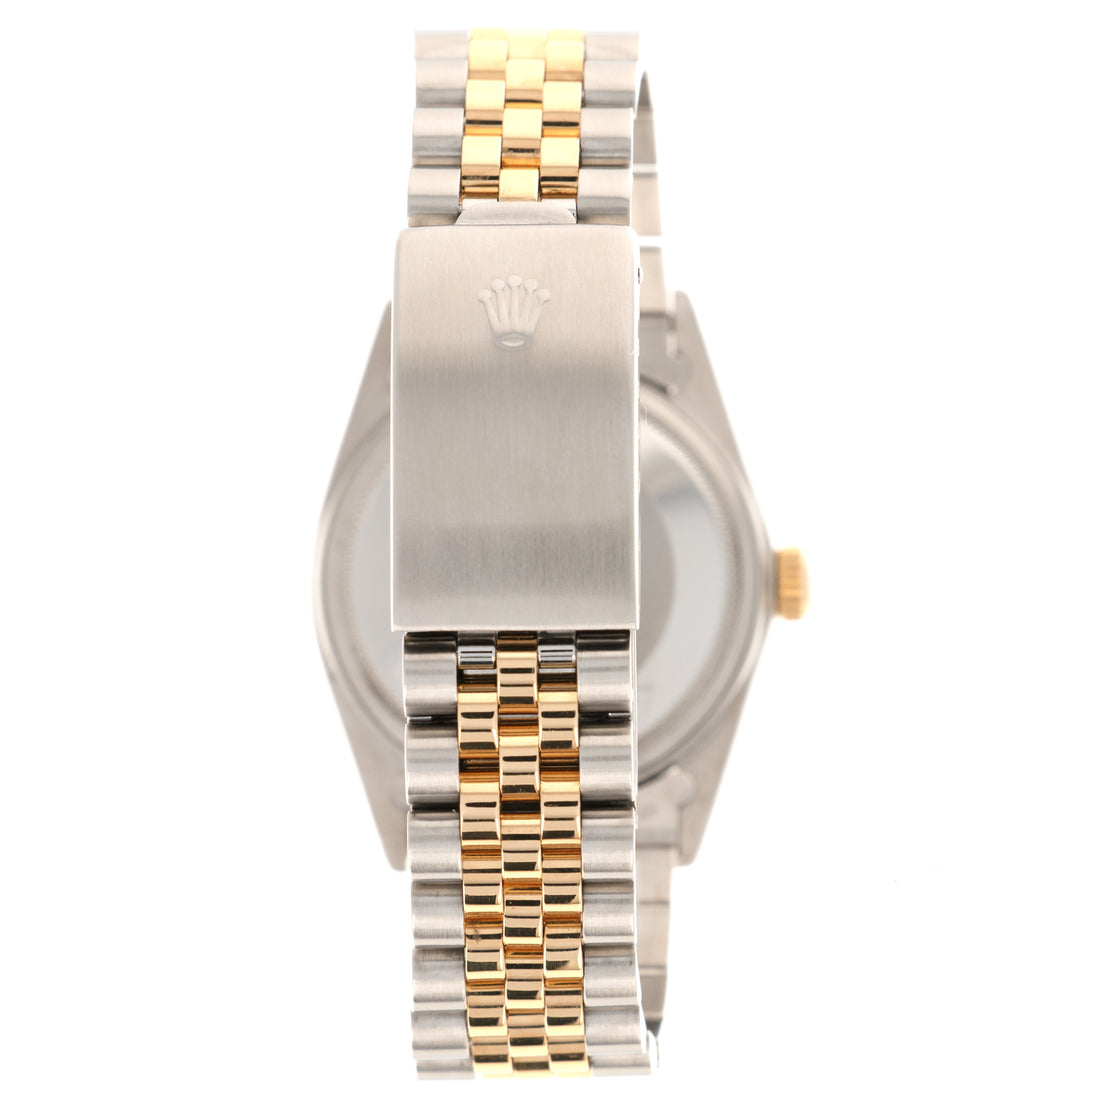 Rolex Two-Tone Datejust Watch Ref. 16013, Retailed by Van Cleef & Arpels